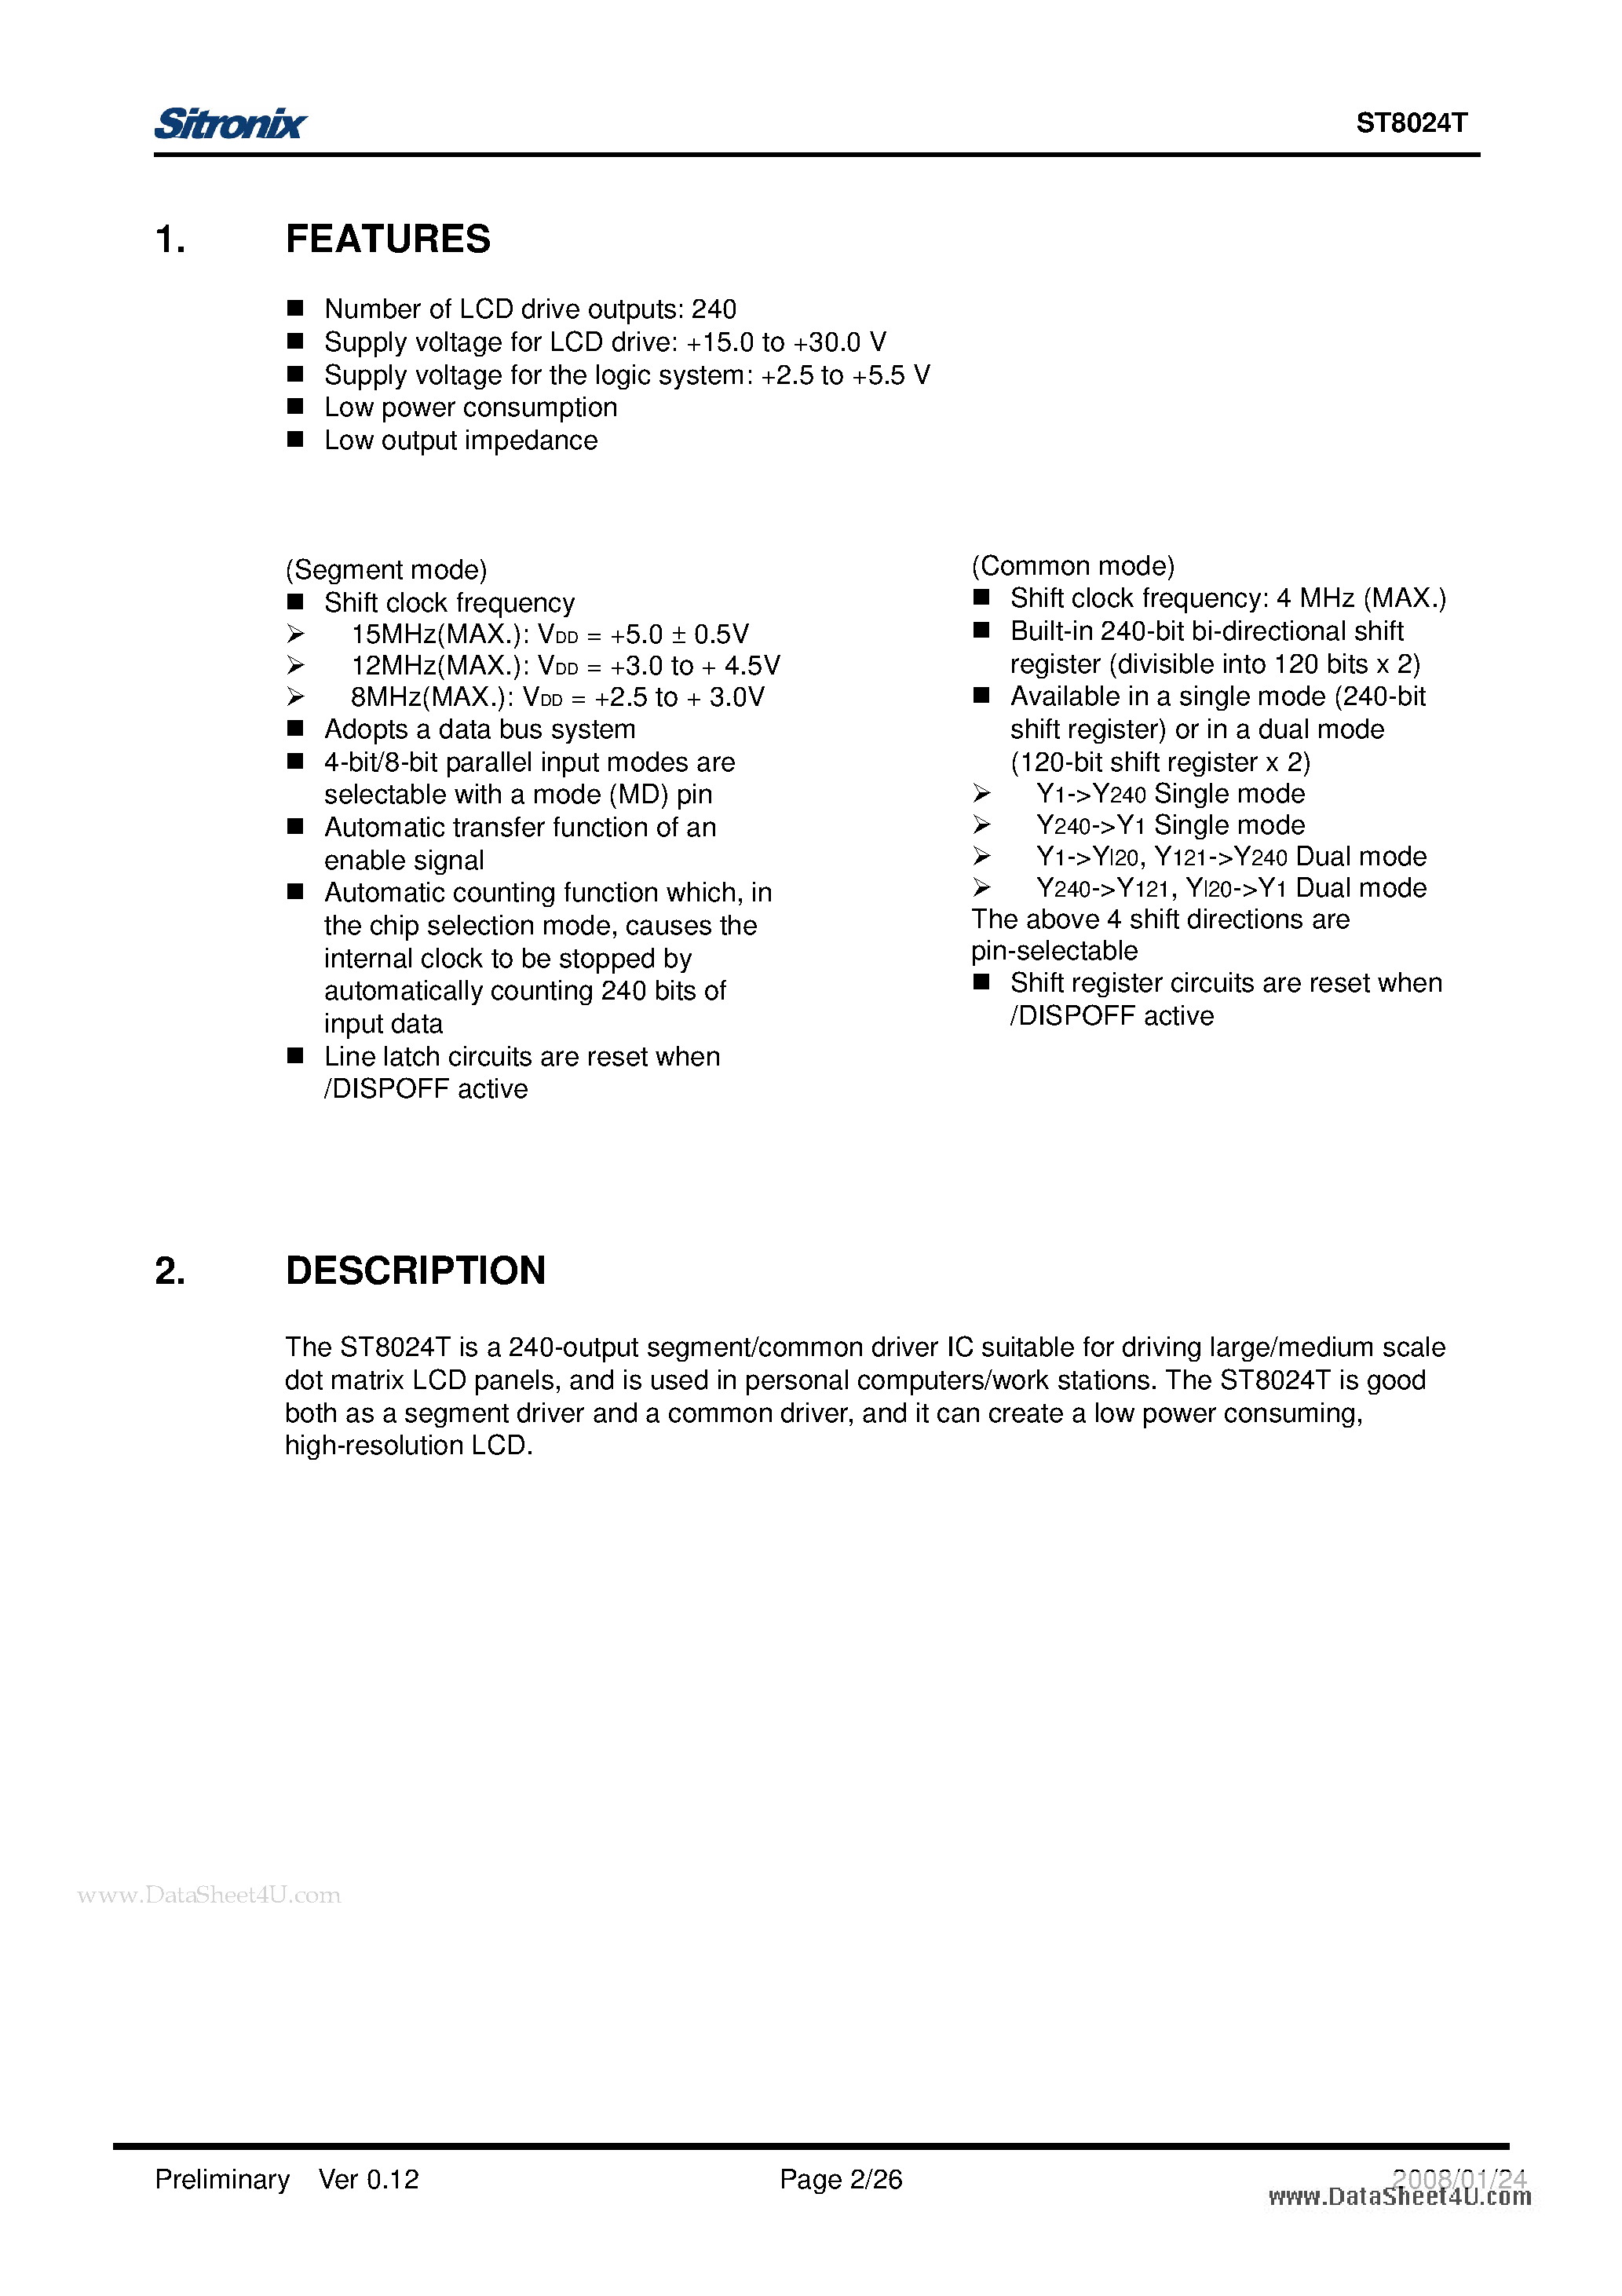 Datasheet ST8024T - COM/SEG LCD Driver page 2